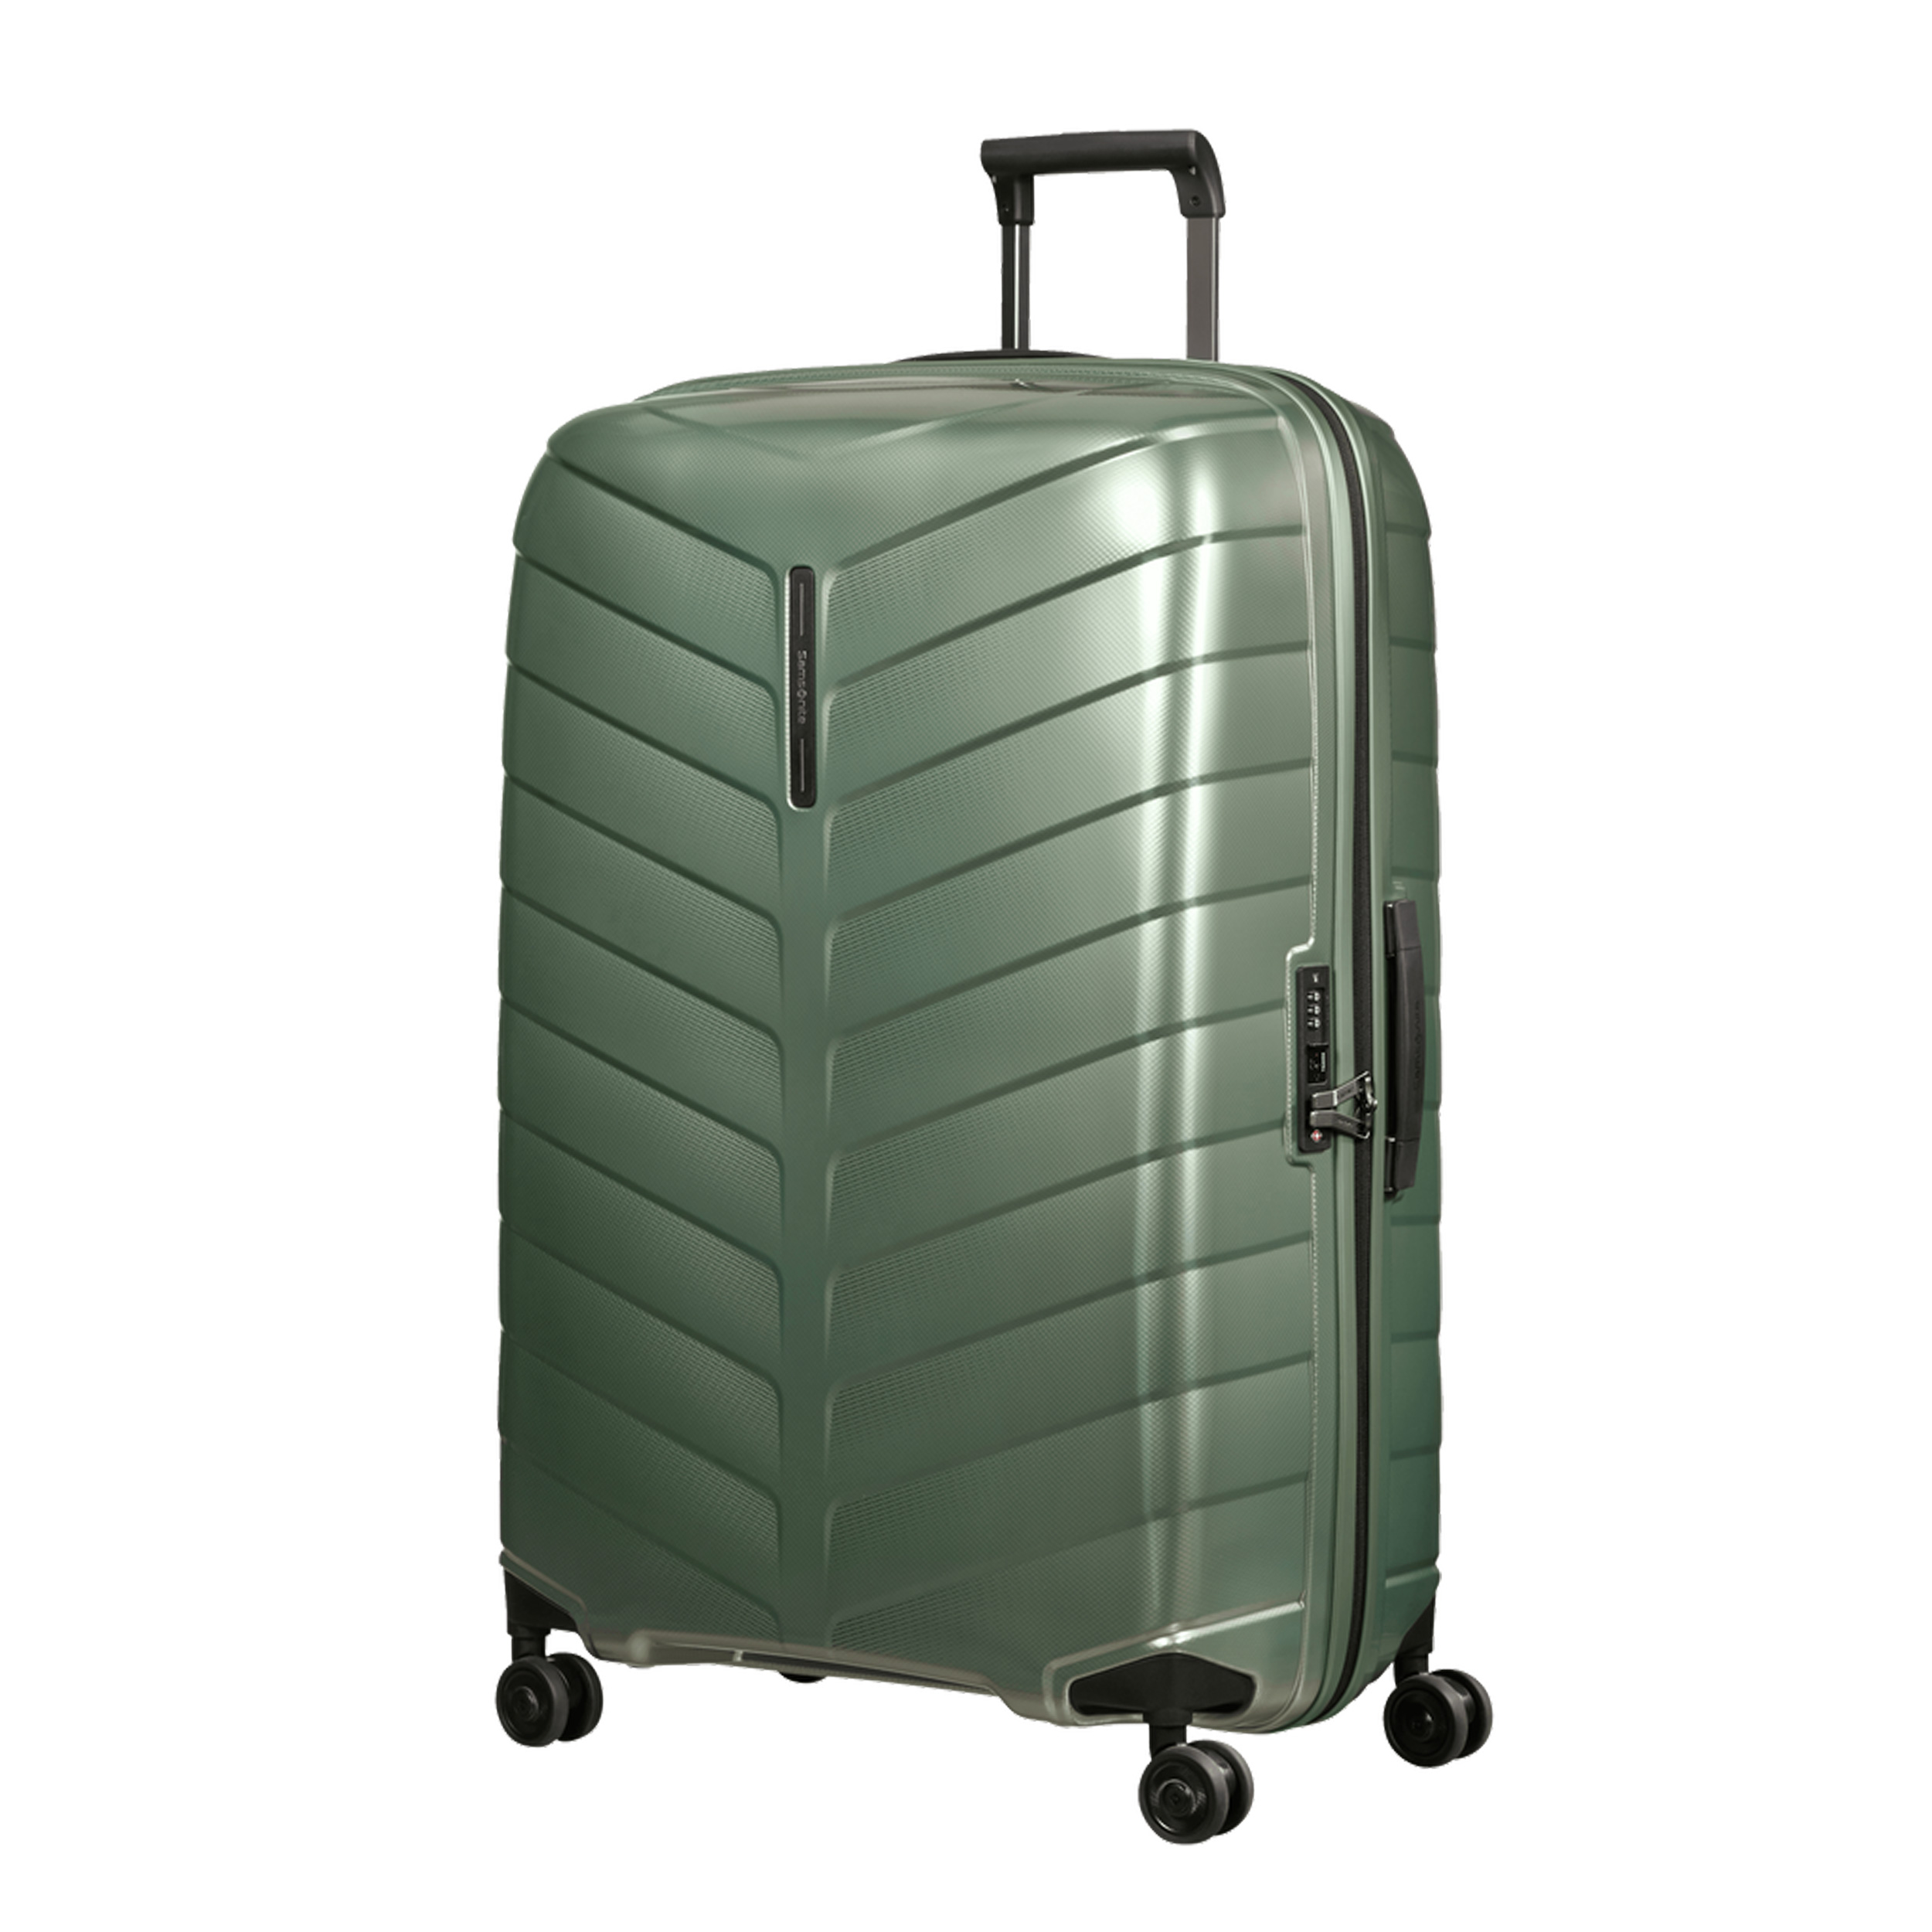 Grande valise 81cm samsonite Attrix basil green14620